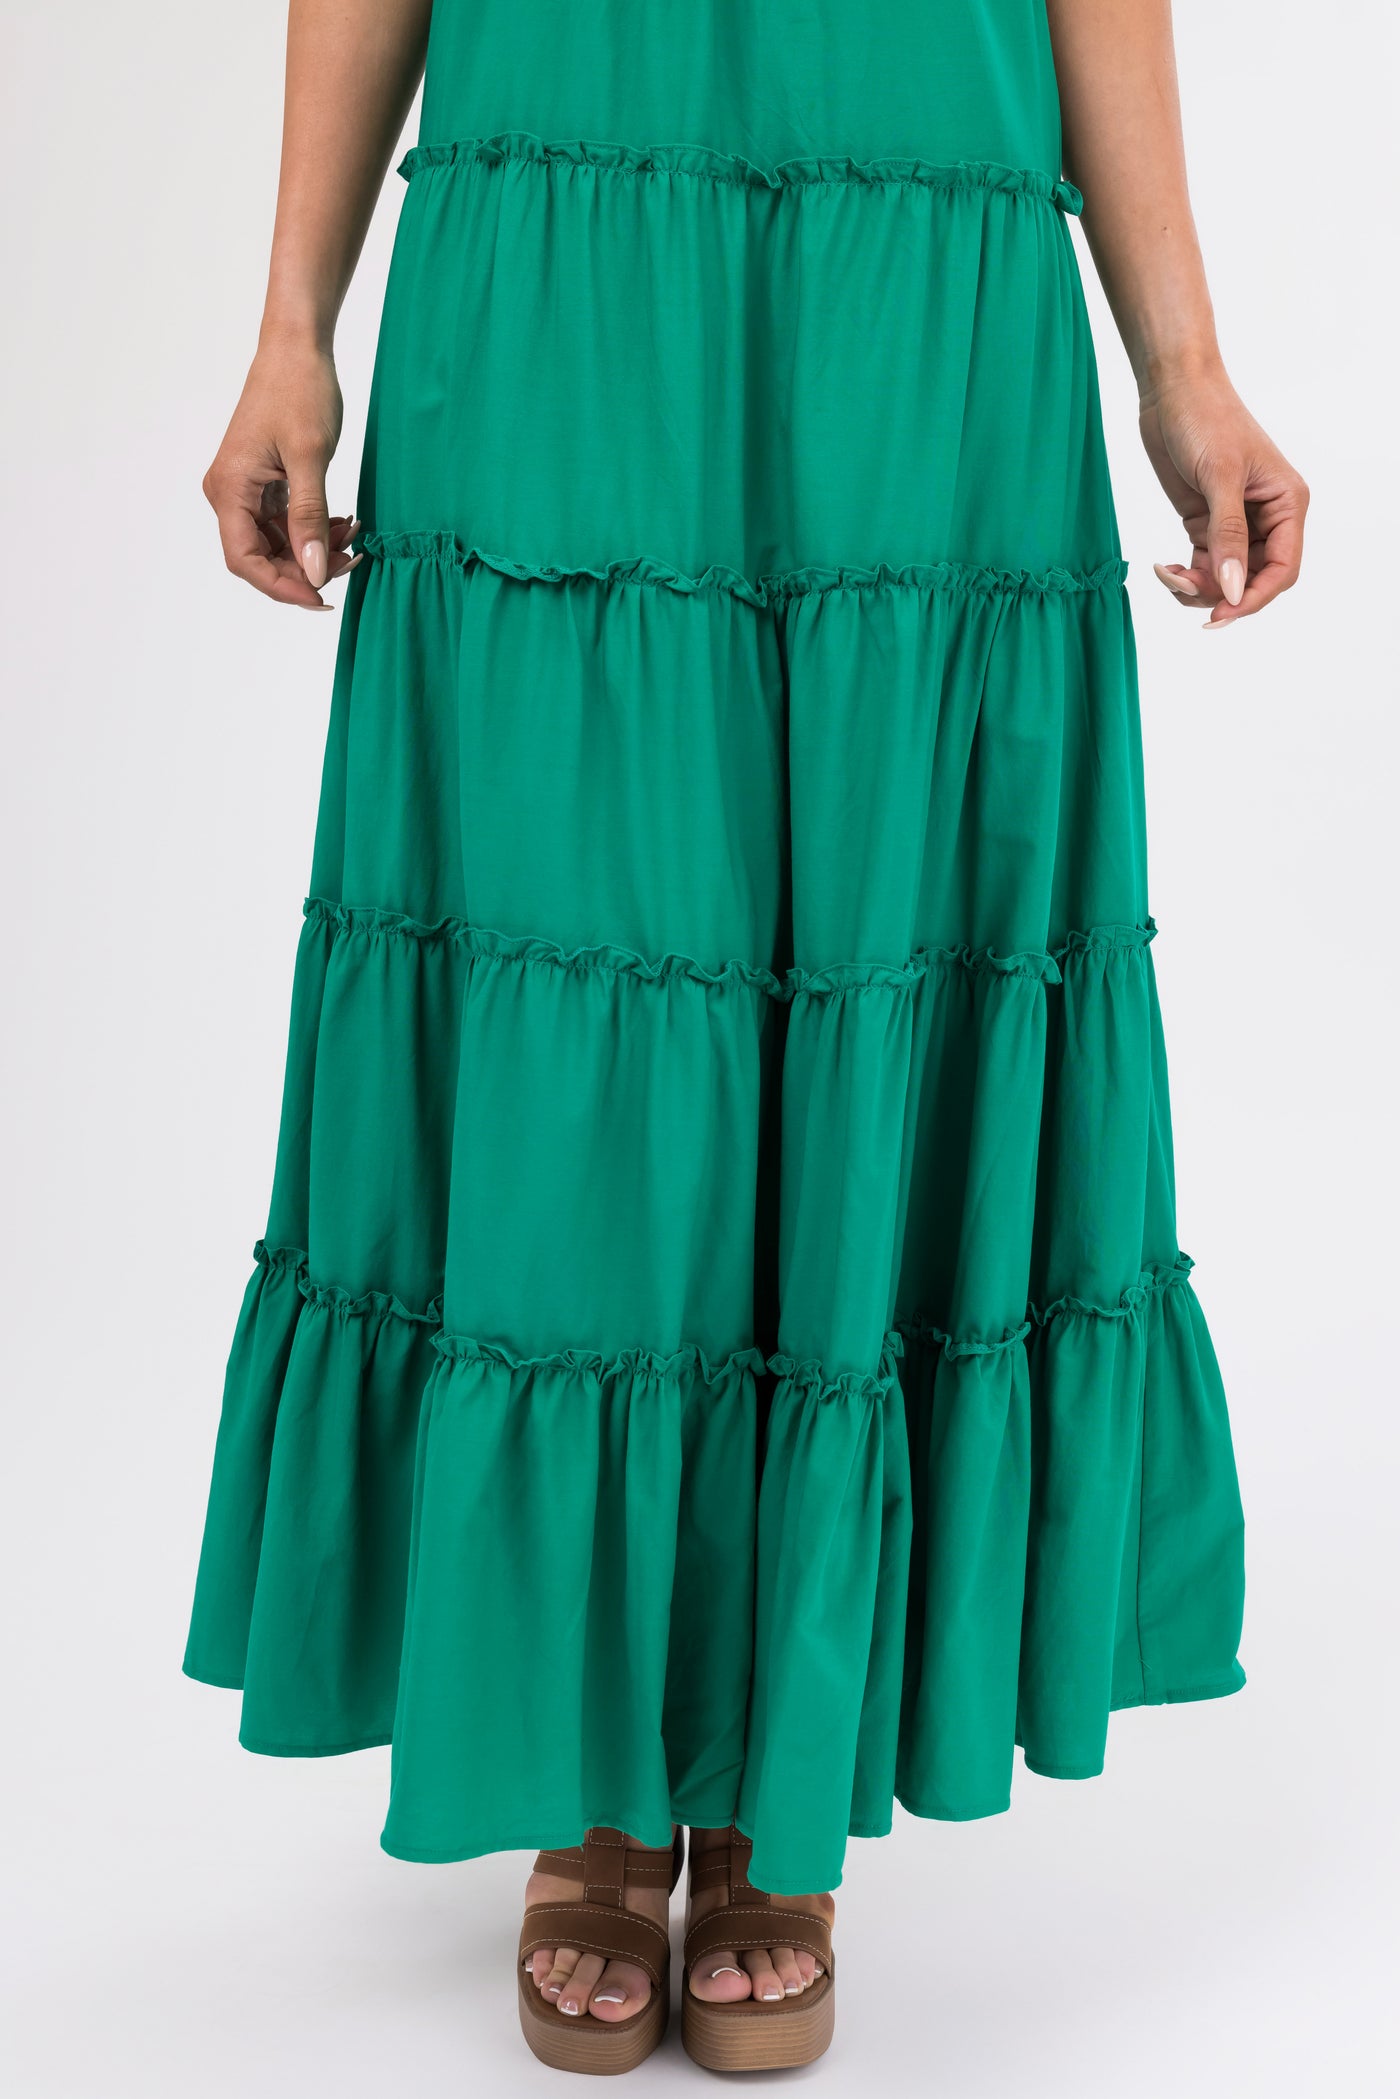 Jade Smocked Top Tiered Maxi Dress